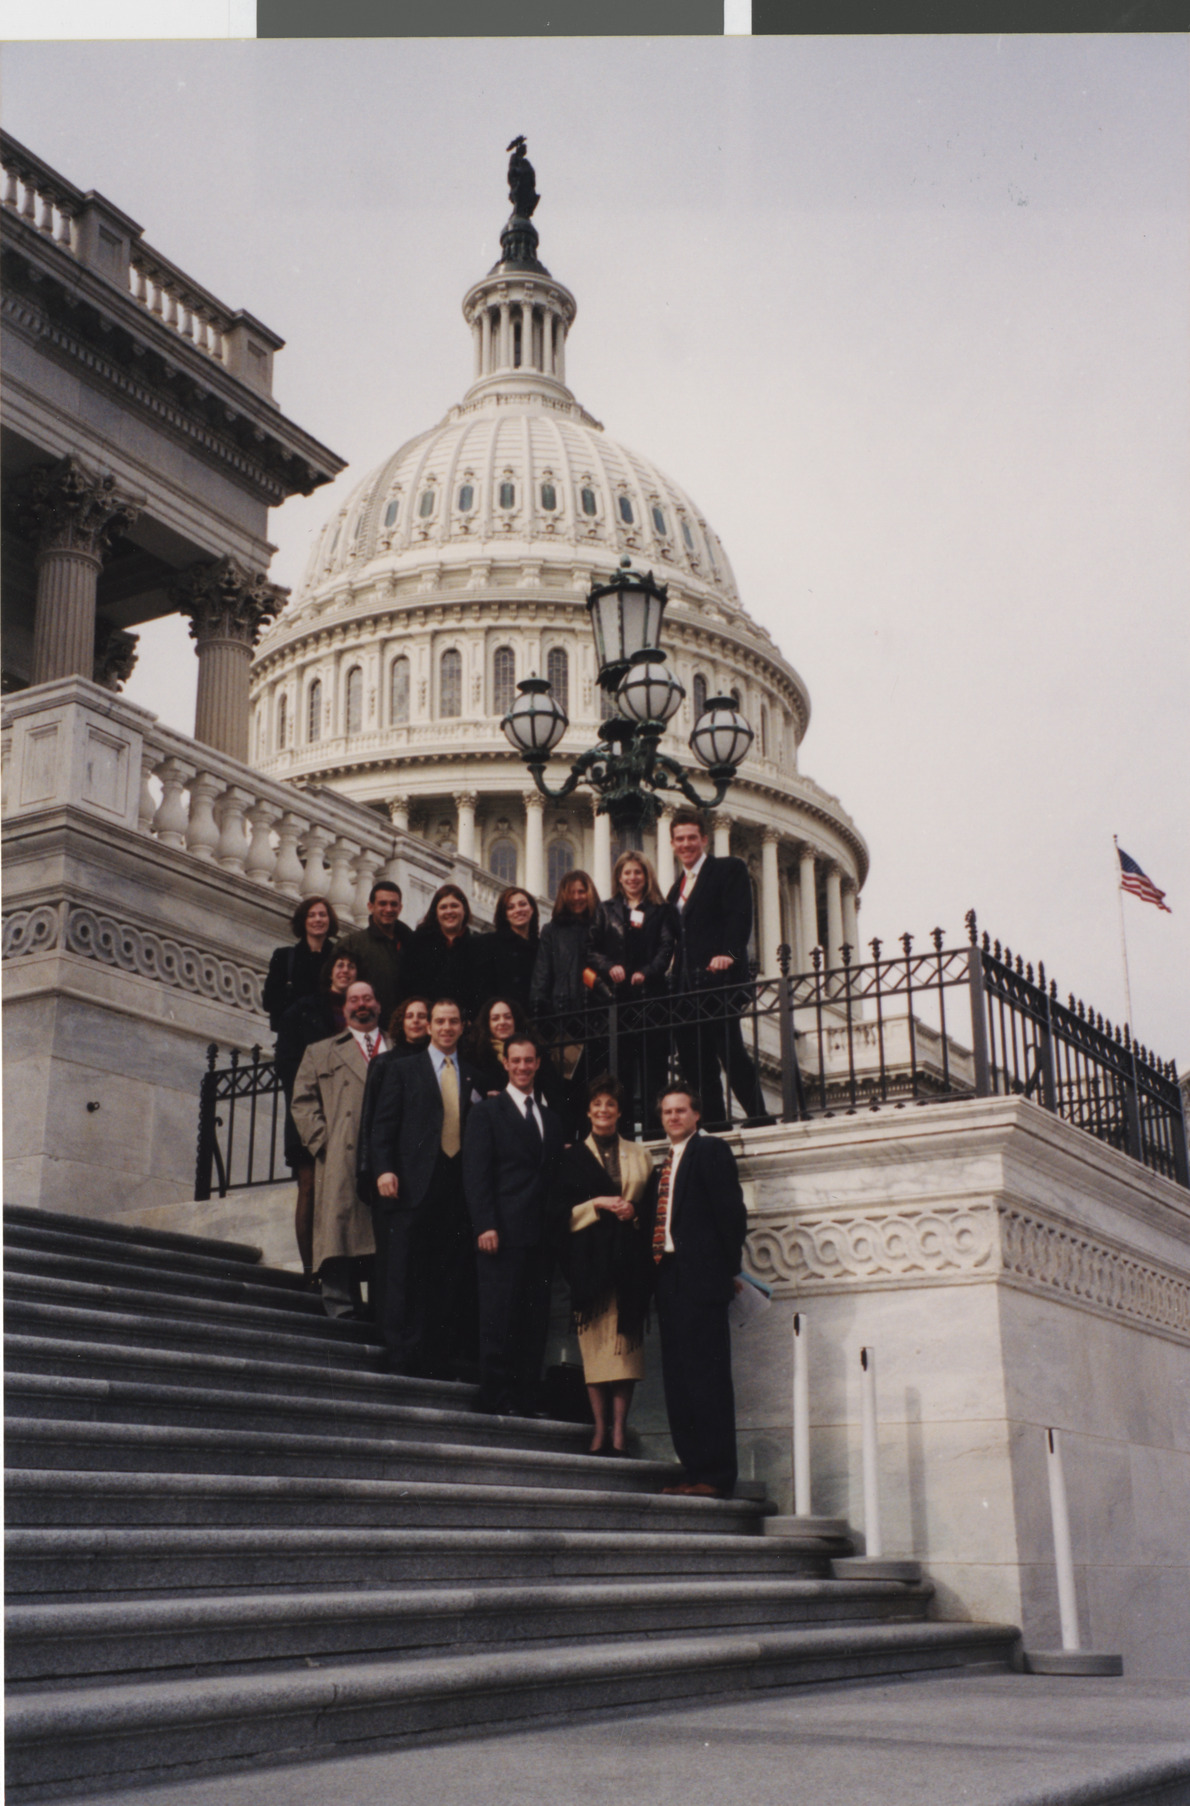 Photograph of a visit to Washington, D.C., undated